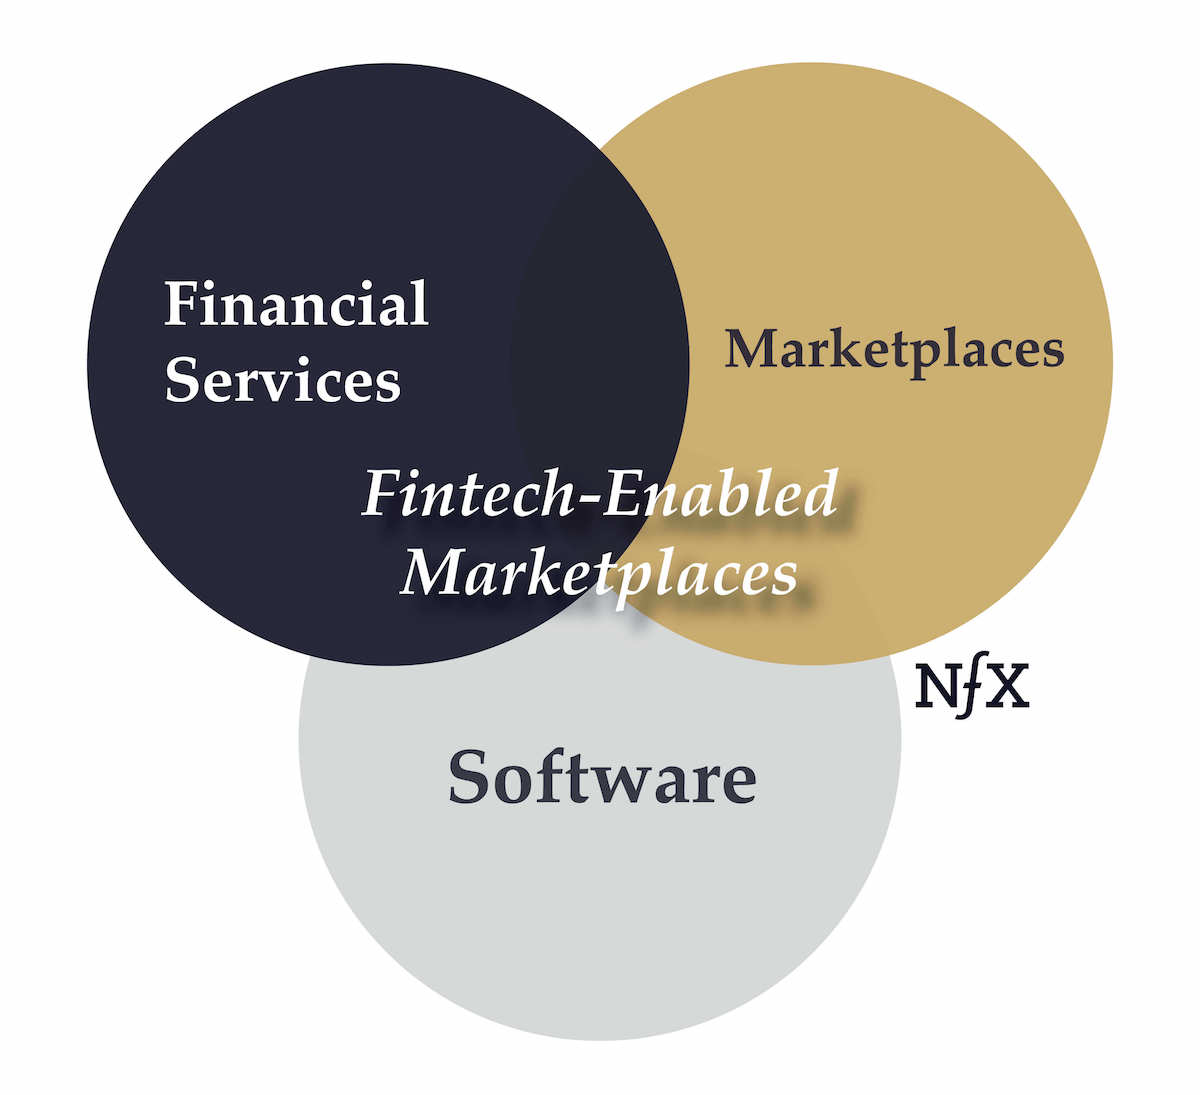 Financial Services, Marketplaces, Software venn diagram